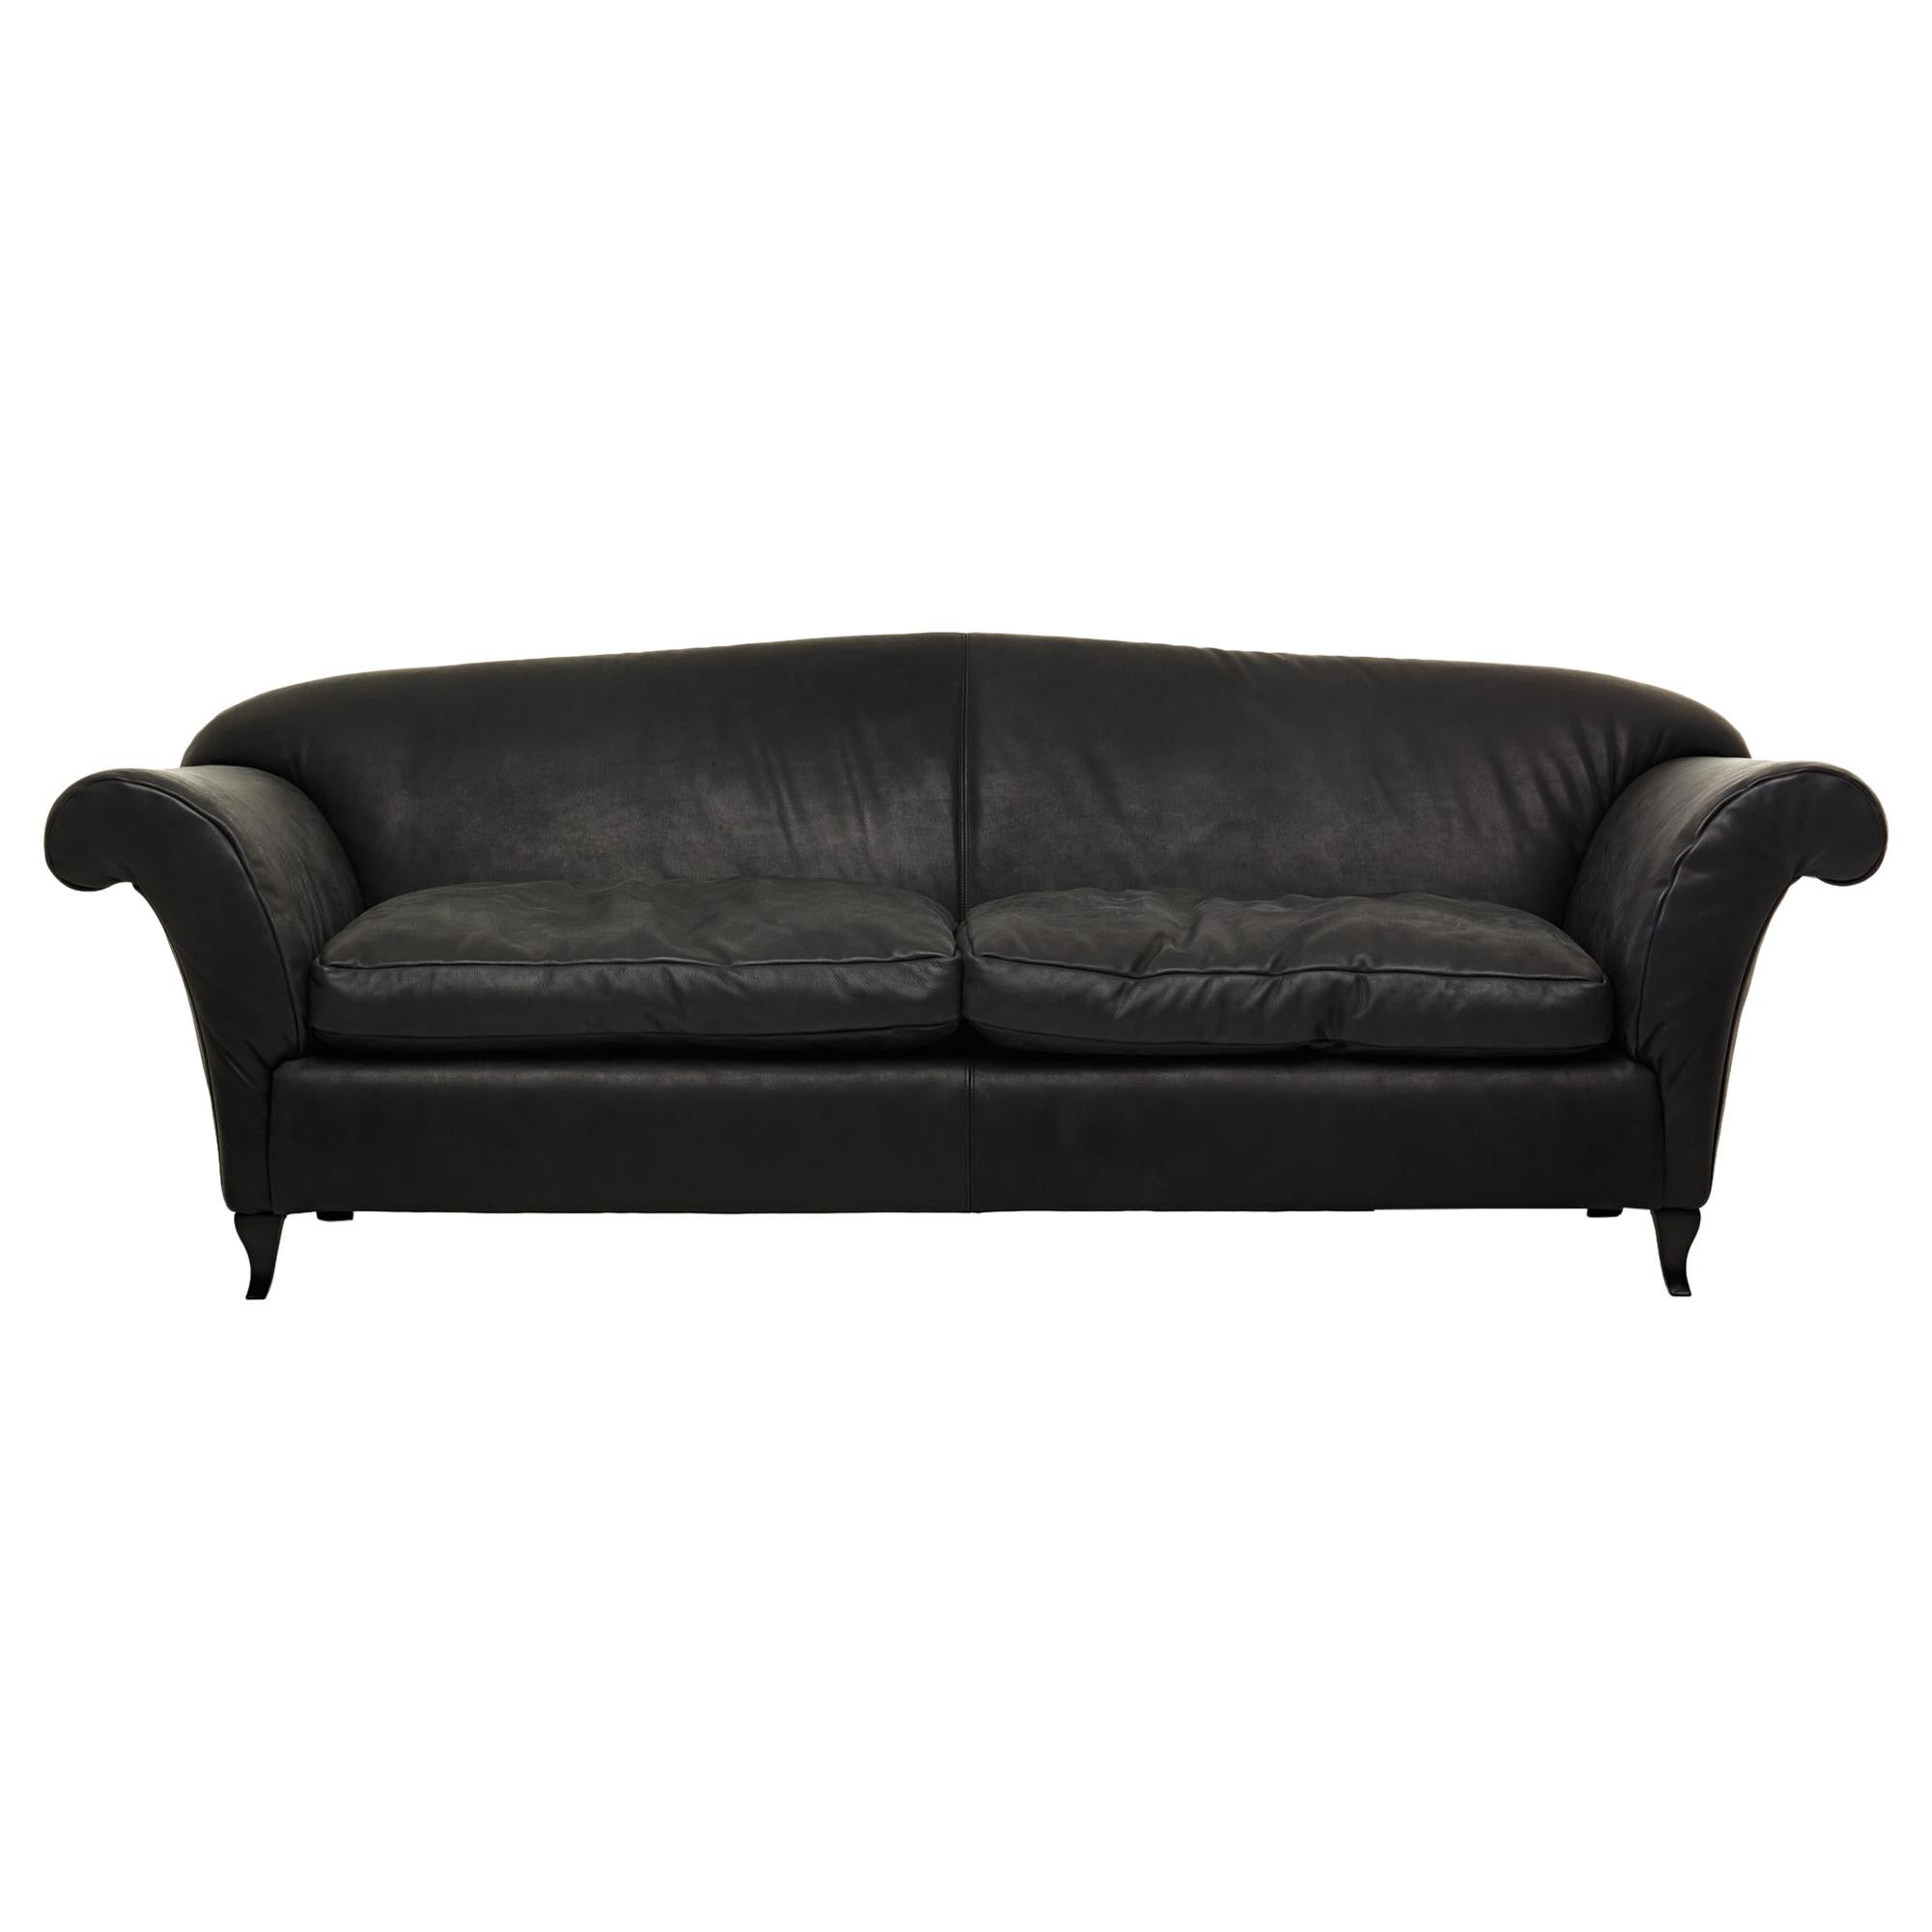 Modernes Sofa des 21. Jahrhunderts, gepolstert mit Leder